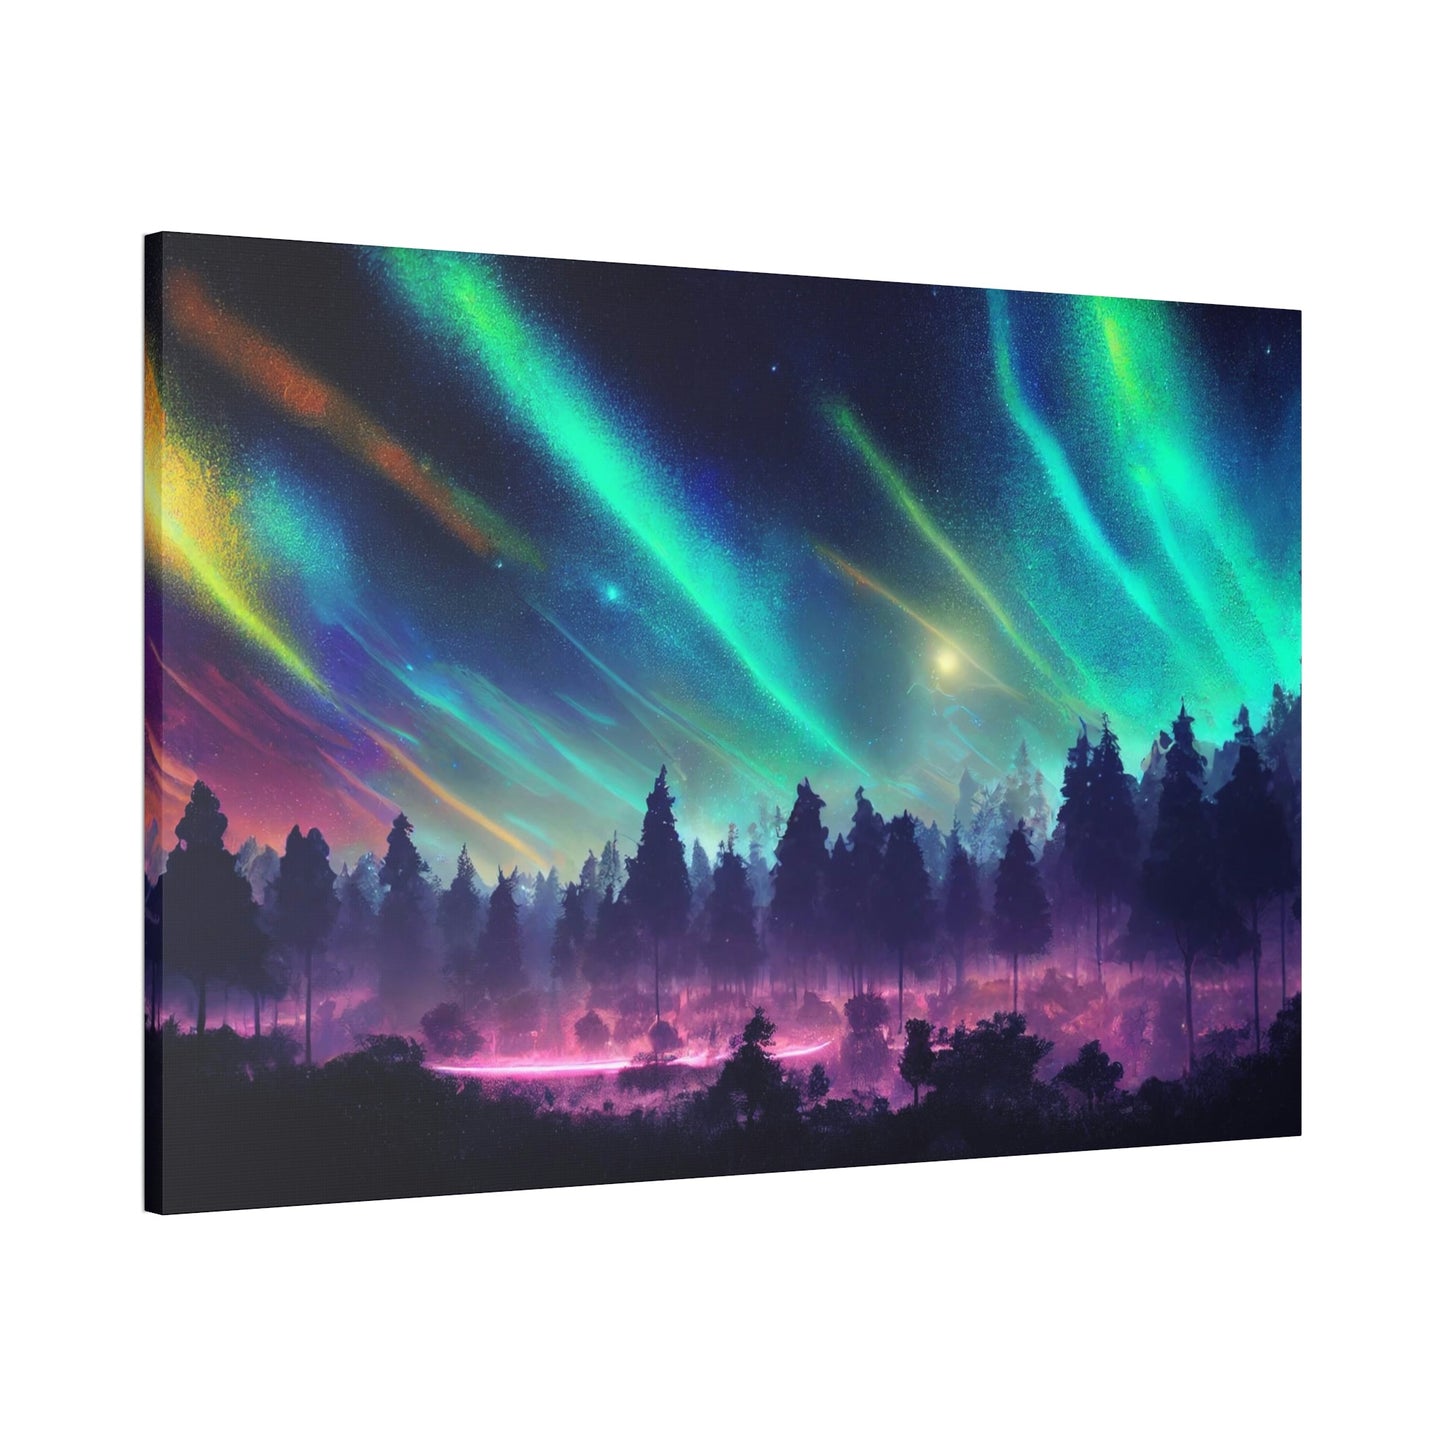 Aurora Borealis Wonderment: A Breathtaking Display of Celestial Beauty